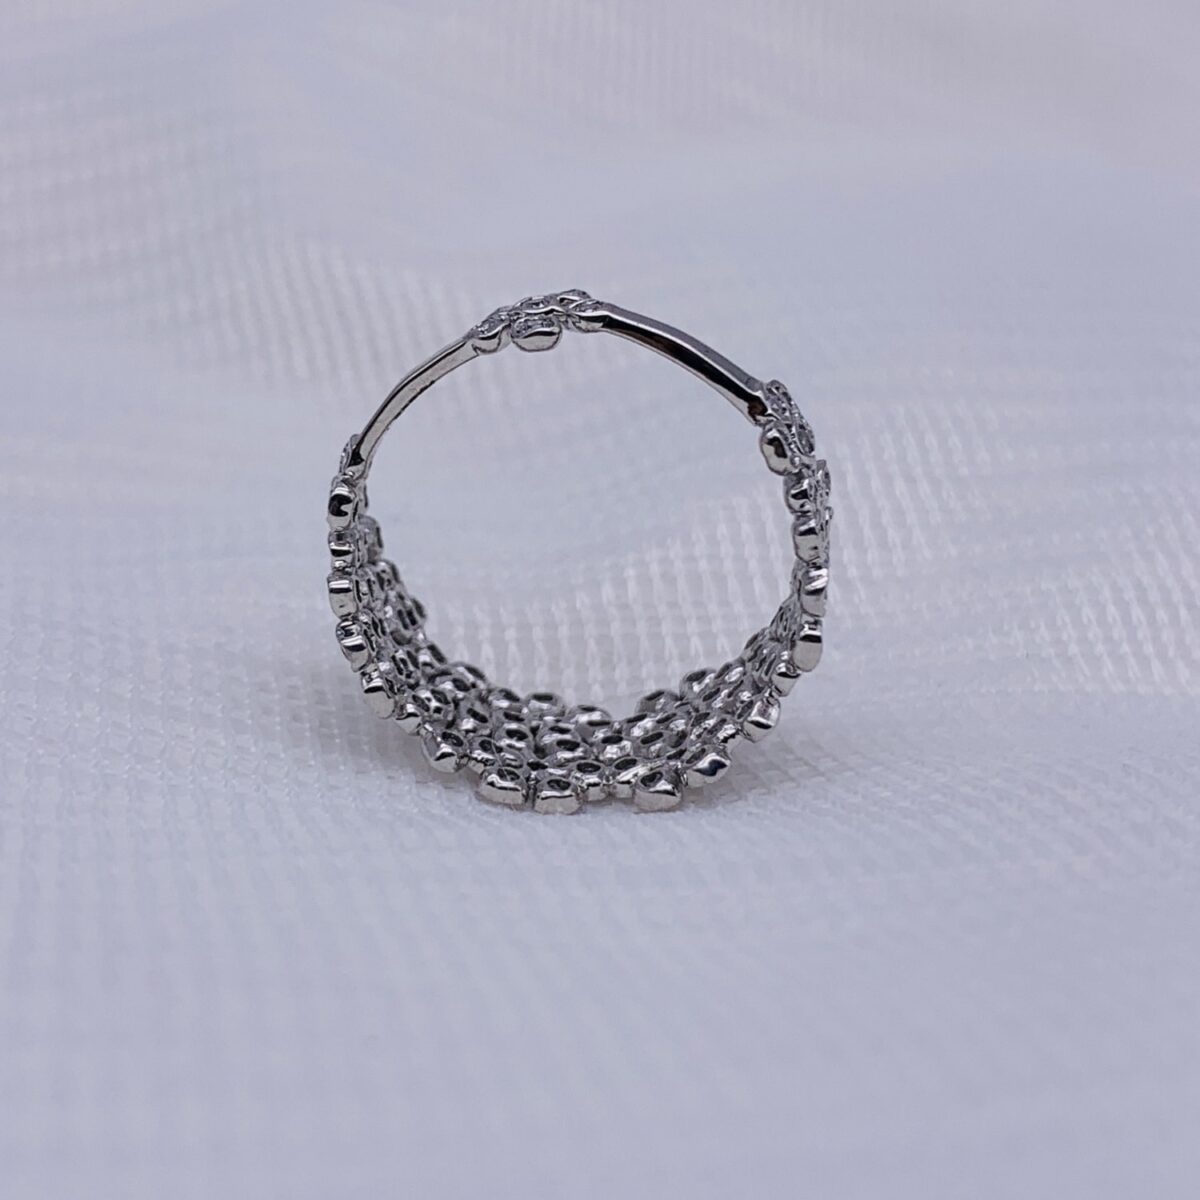 Edwardian style round cut lab grown diamond ring